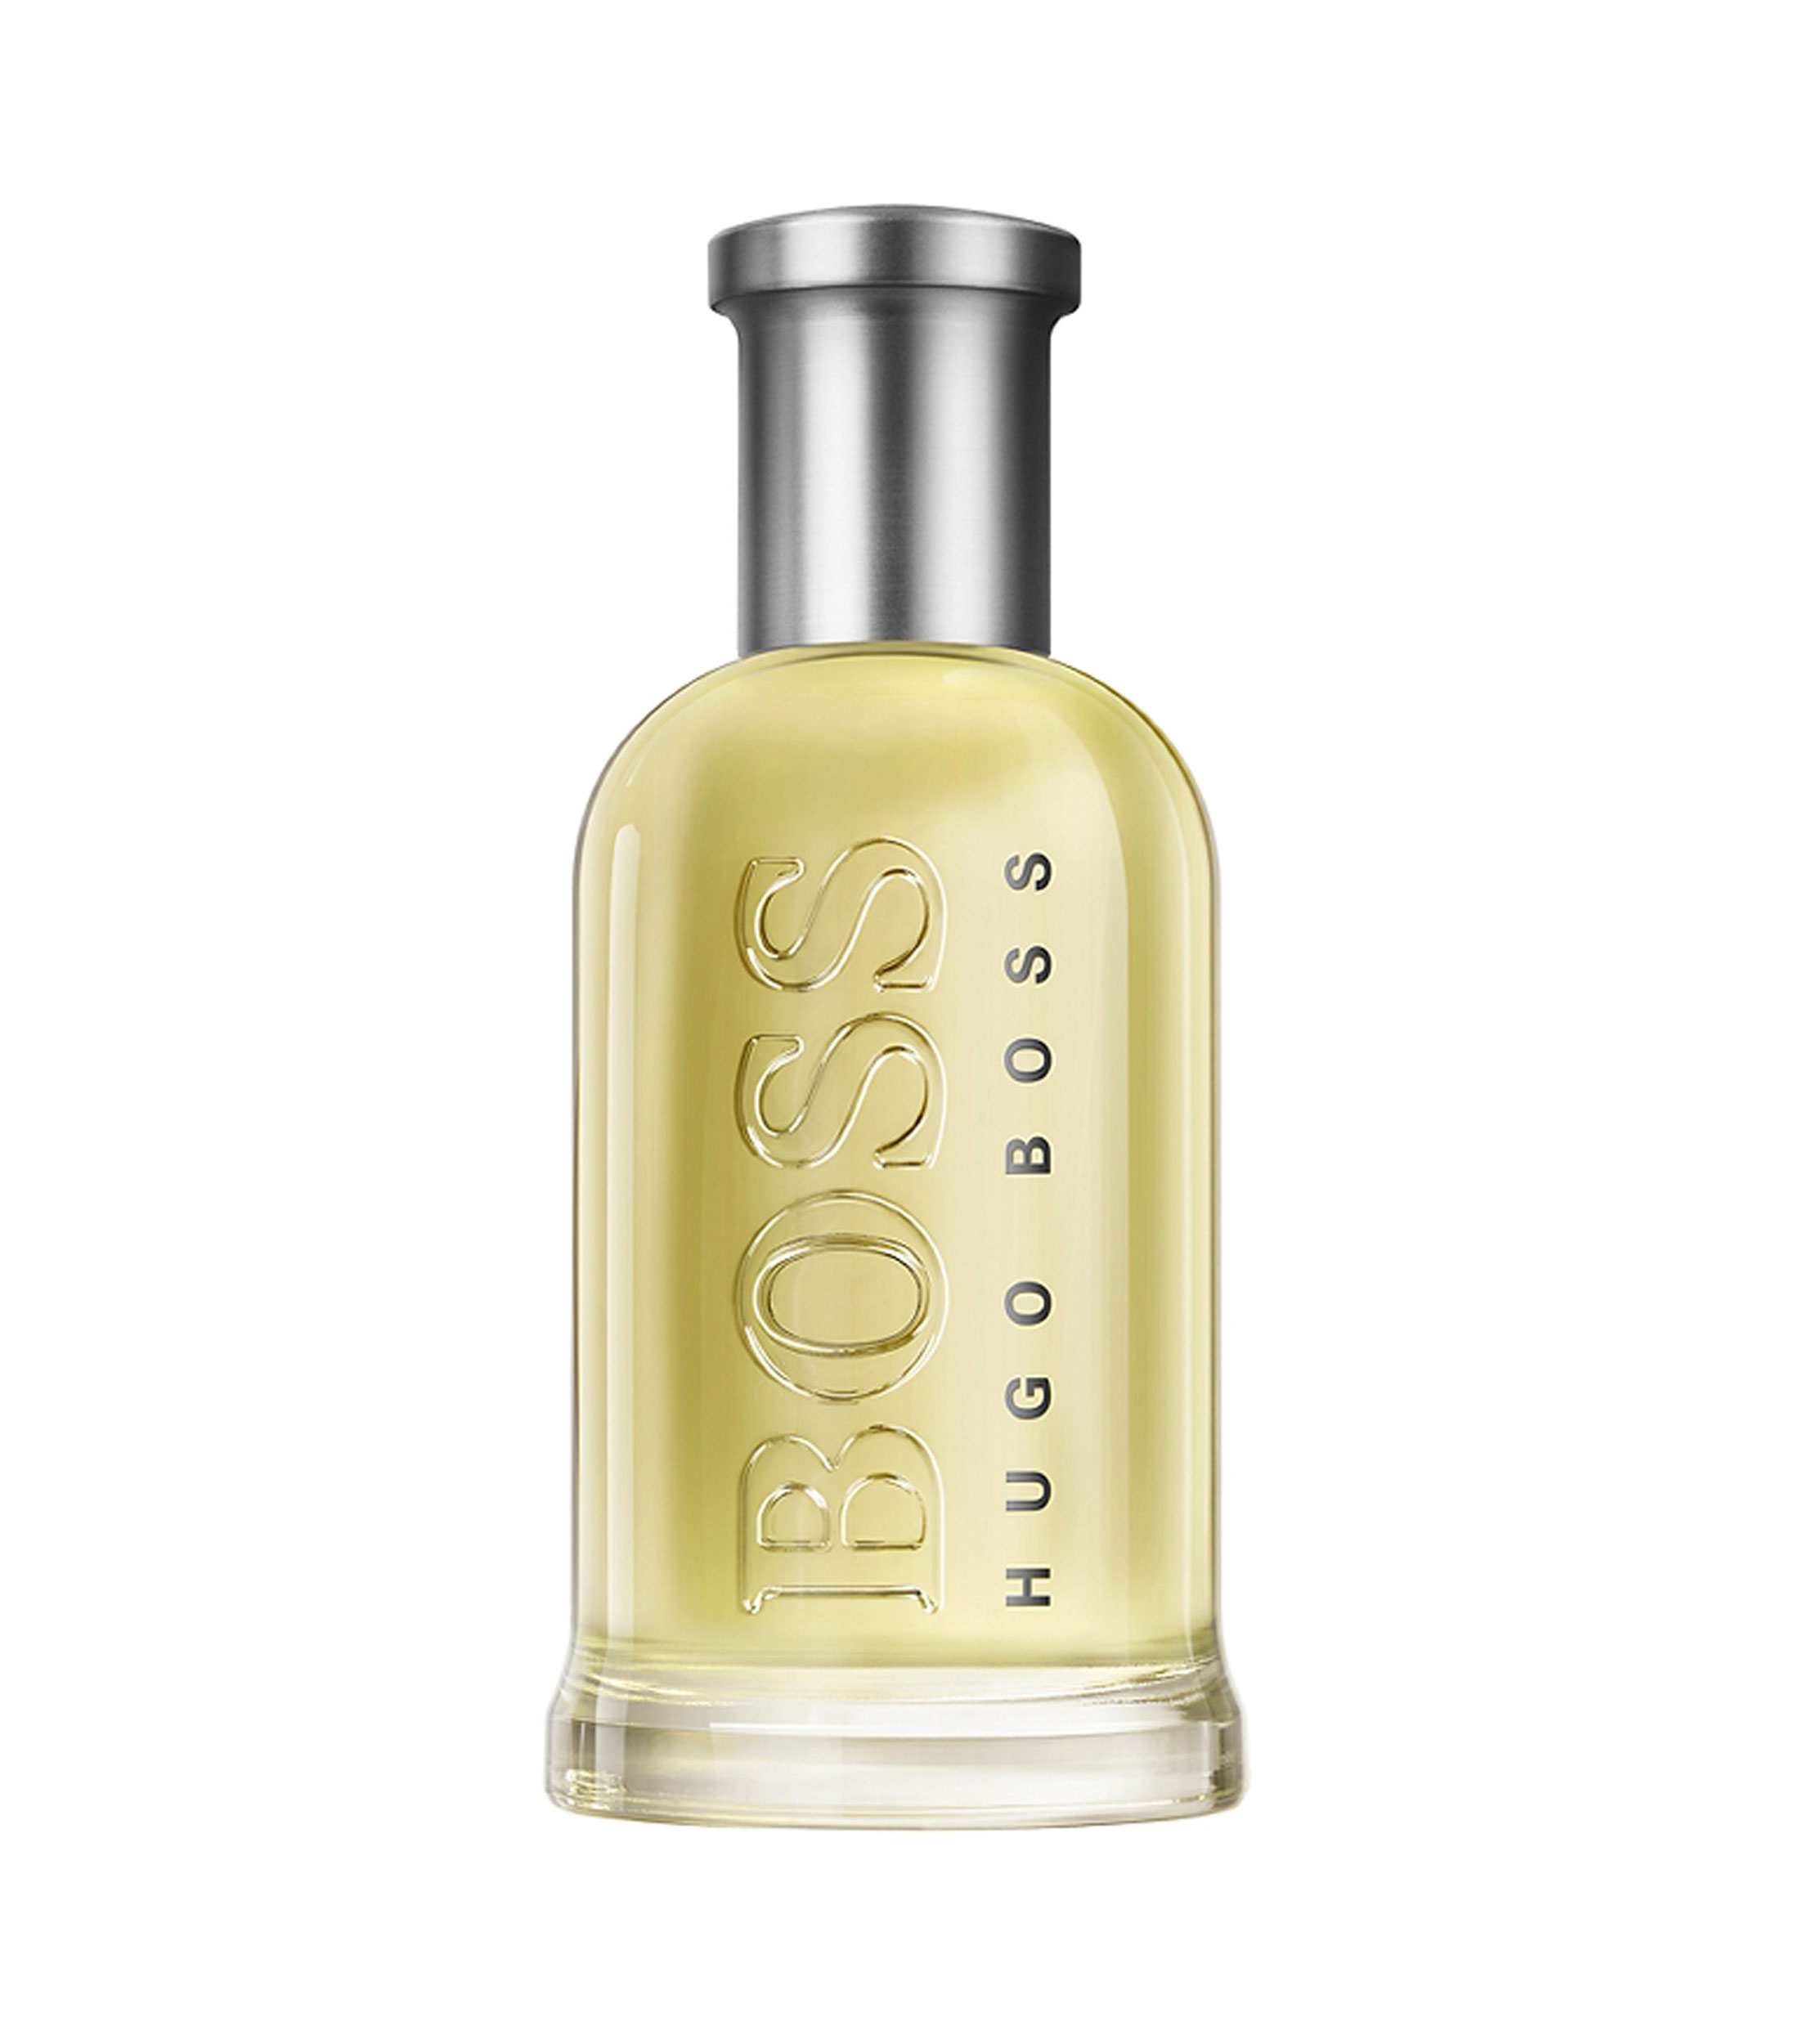 Letrista revolución entusiasmo Hugo Boss Perfume, Boss Bottled Eau de Toilette, 100 ml Hombre - El Palacio  de Hierro